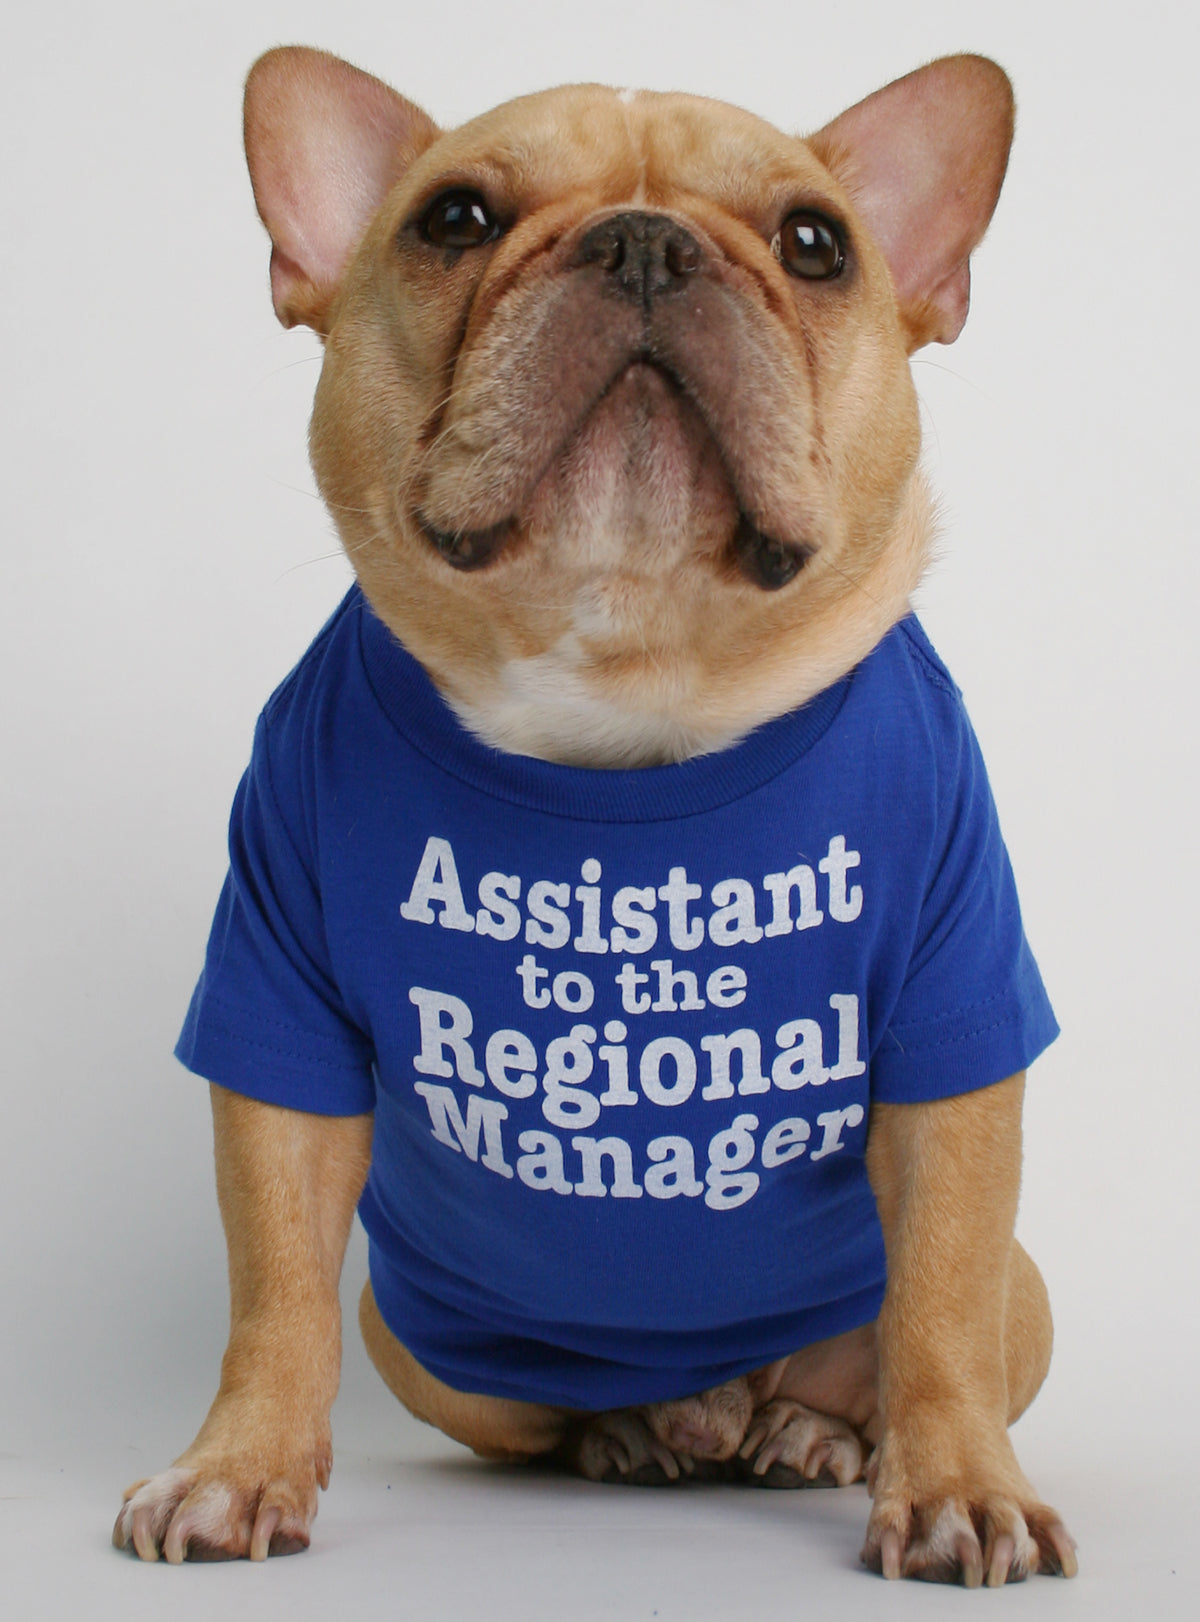 Regional + Assistant Manager Matching T-Shirt Set